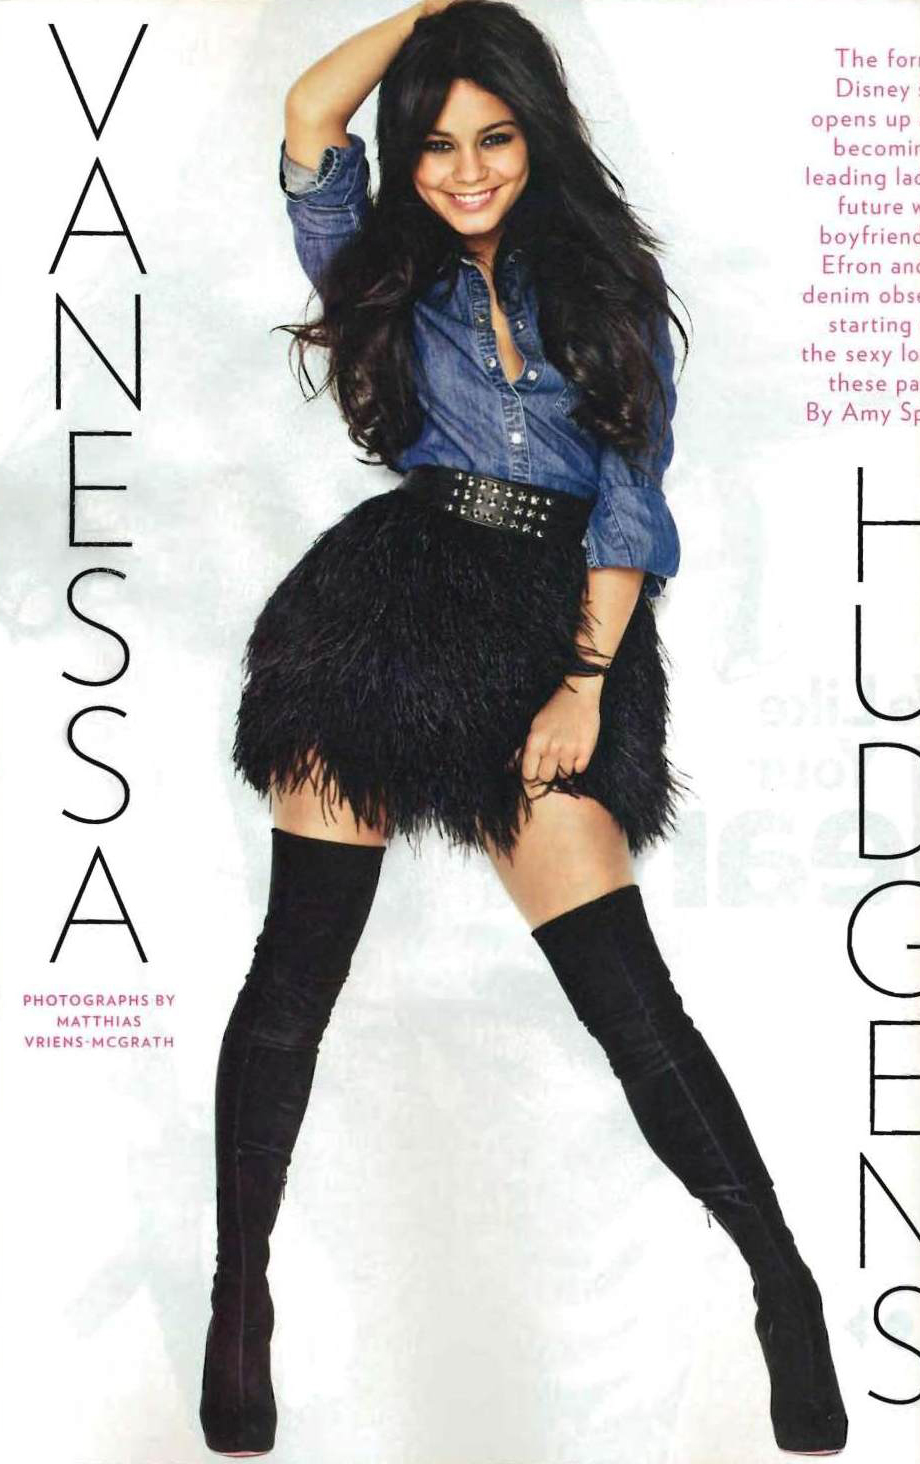 Vanessa Hudgens - Glamour magazine photoshoot. 